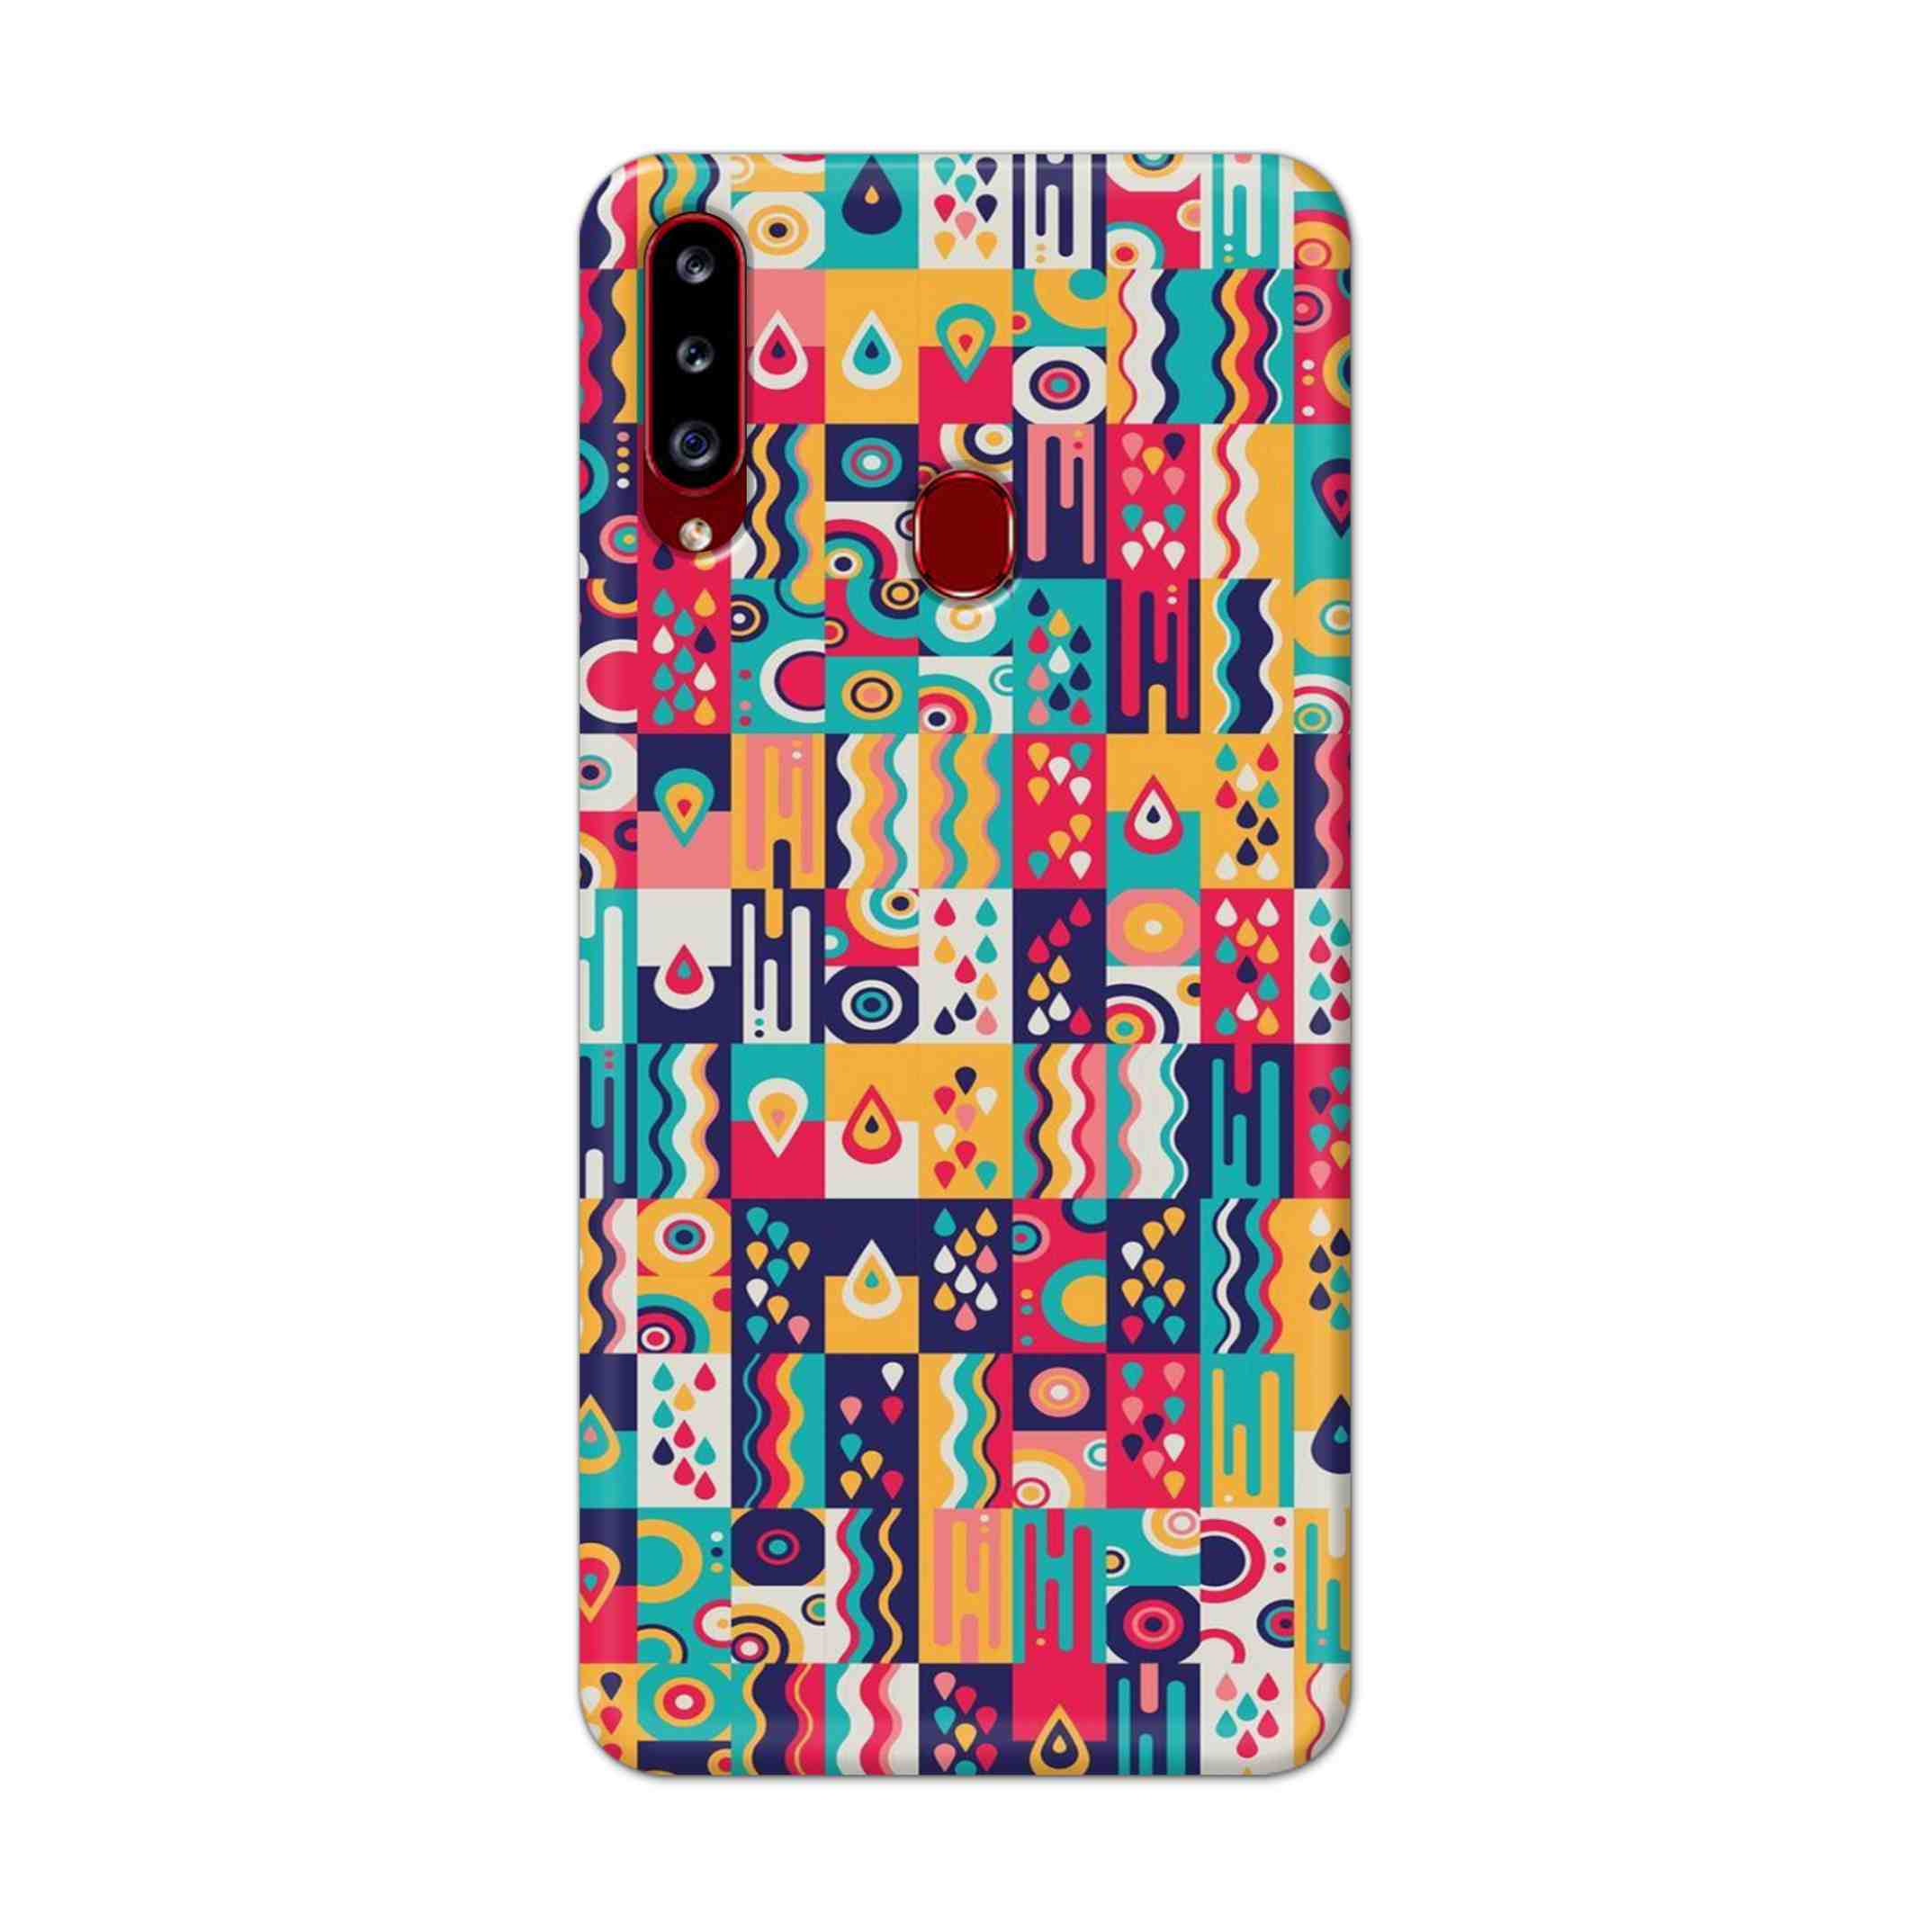 Buy Art Hard Back Mobile Phone Case Cover For Samsung A20s Online